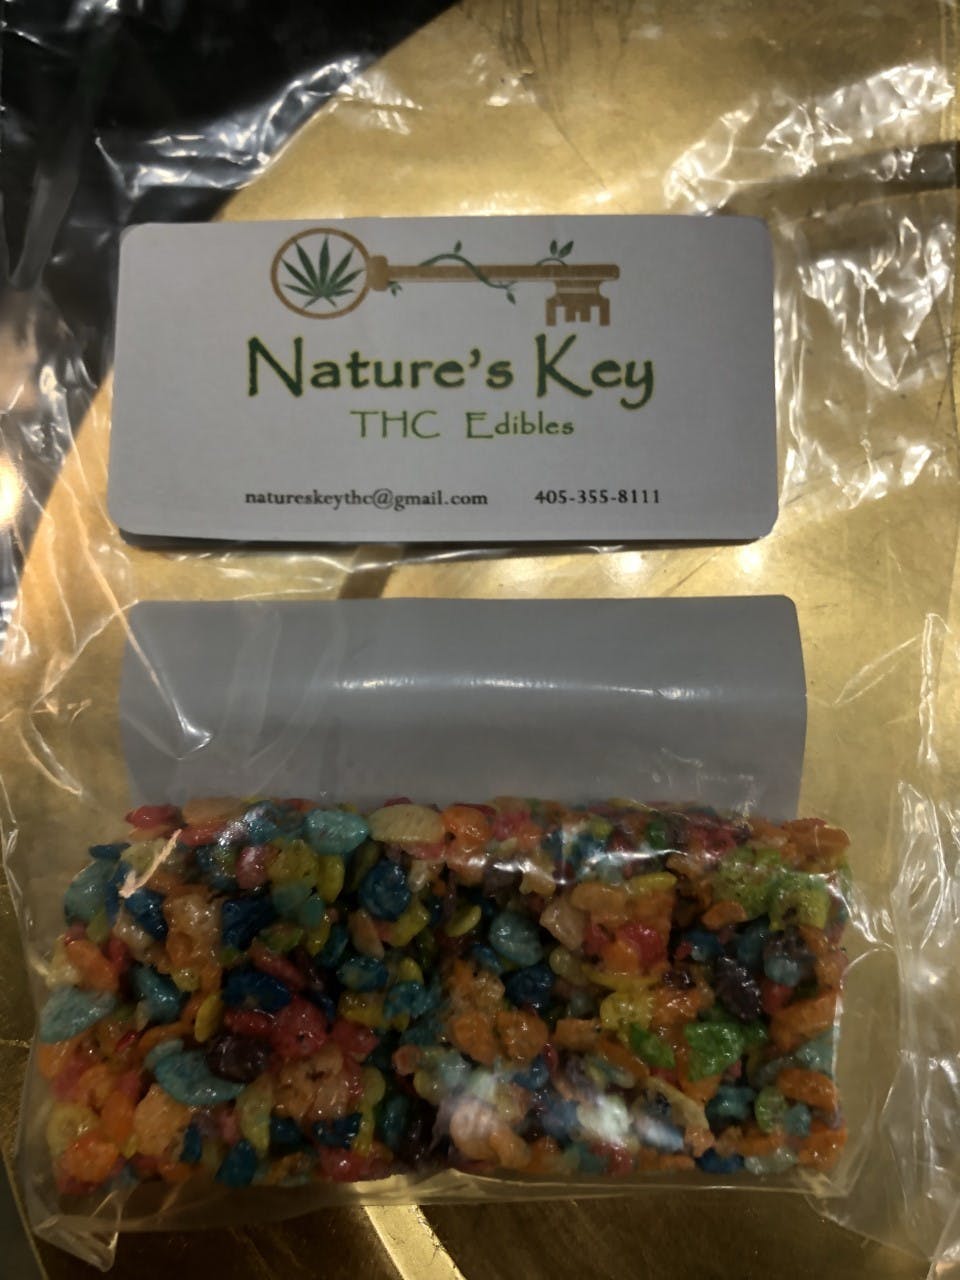 edible-natures-key-potluck-crispy-treats-50mg